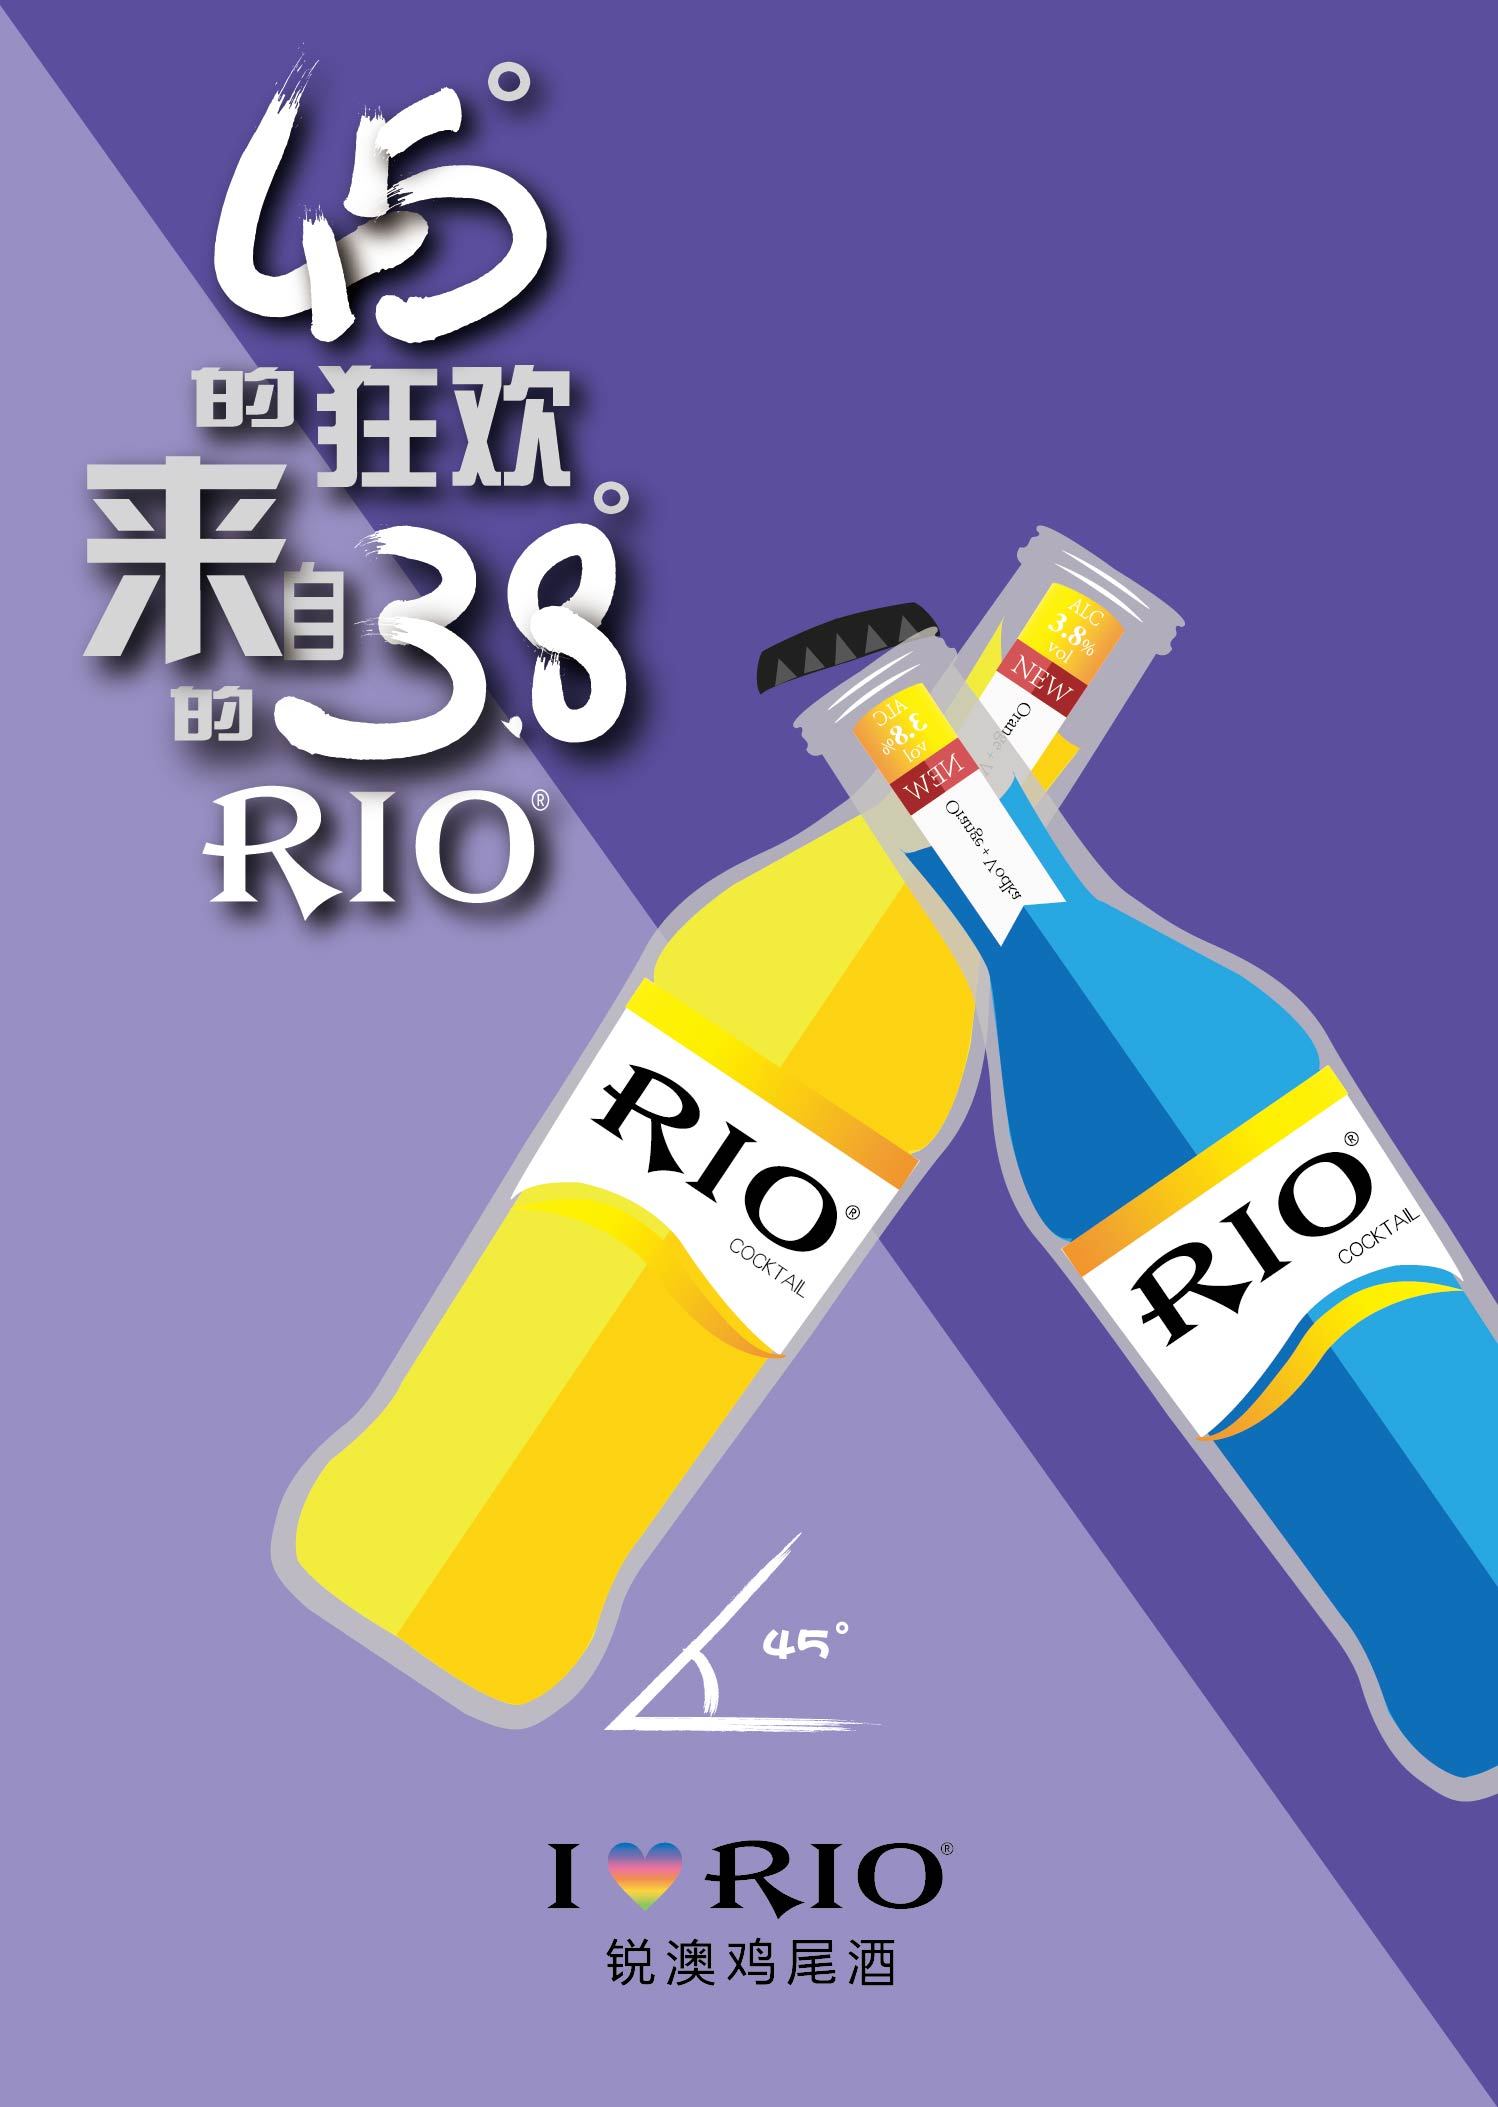 rio平面广告图片